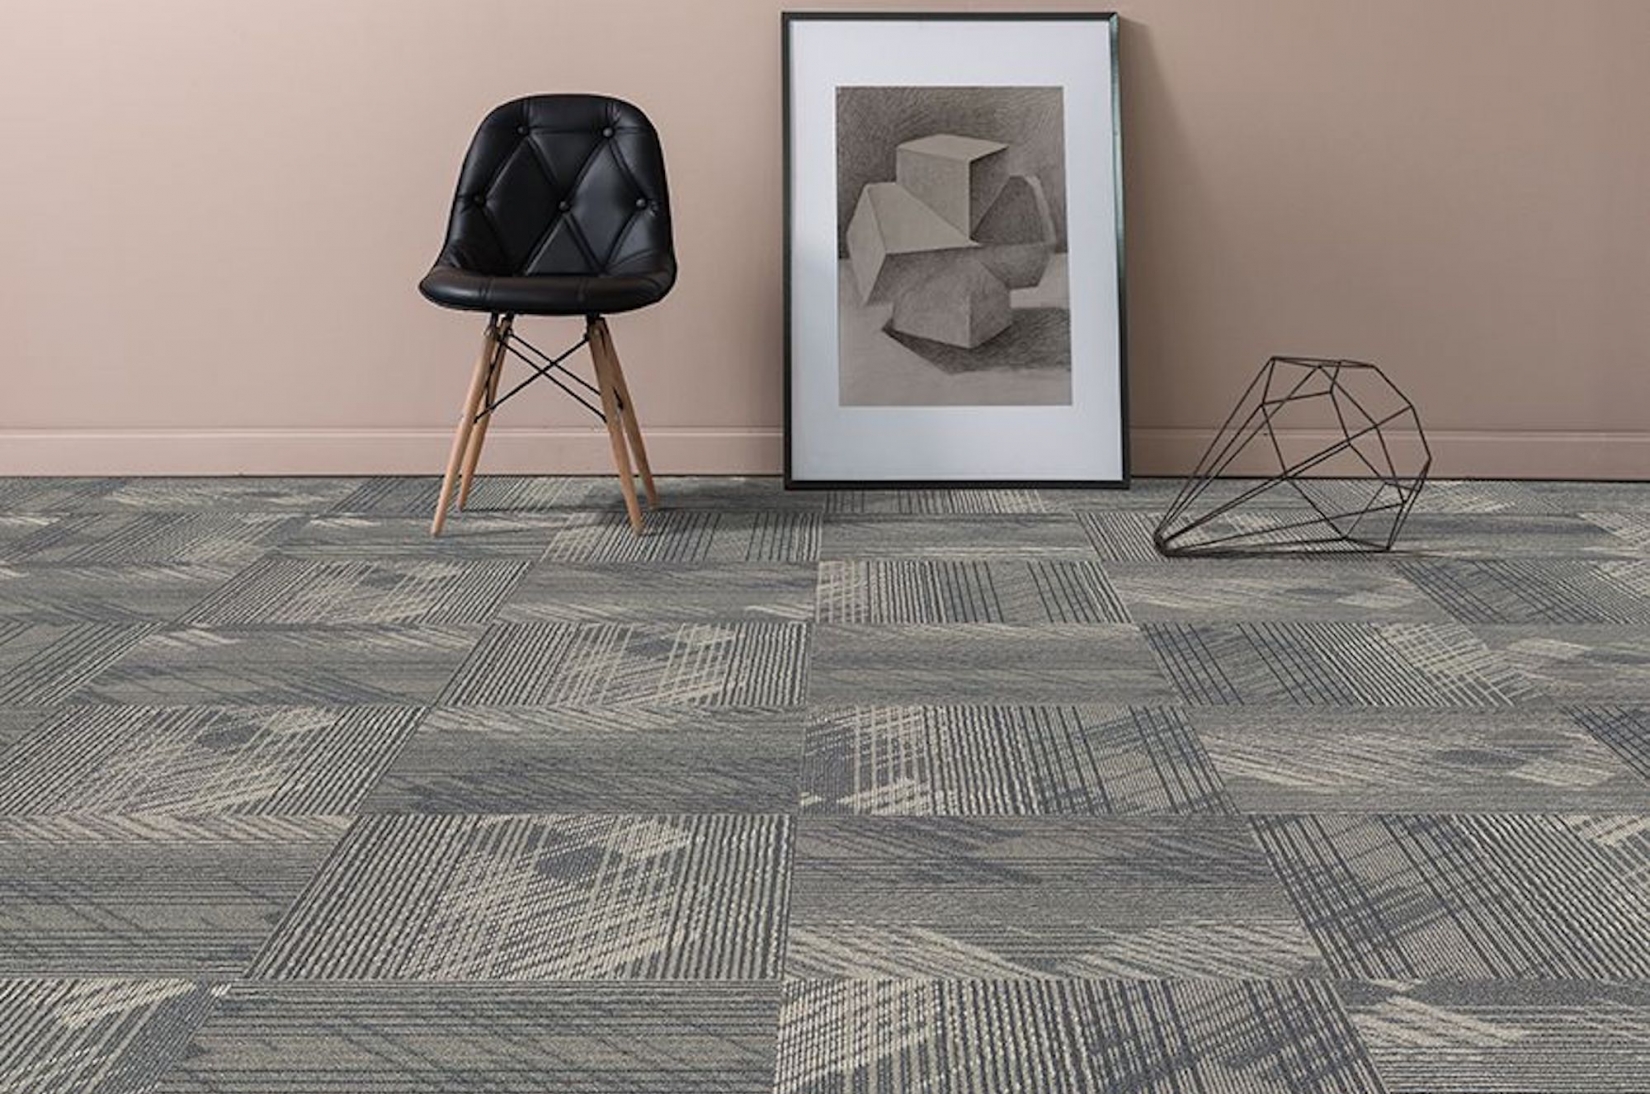 Sketch Carpet Planks and Tiles - #500